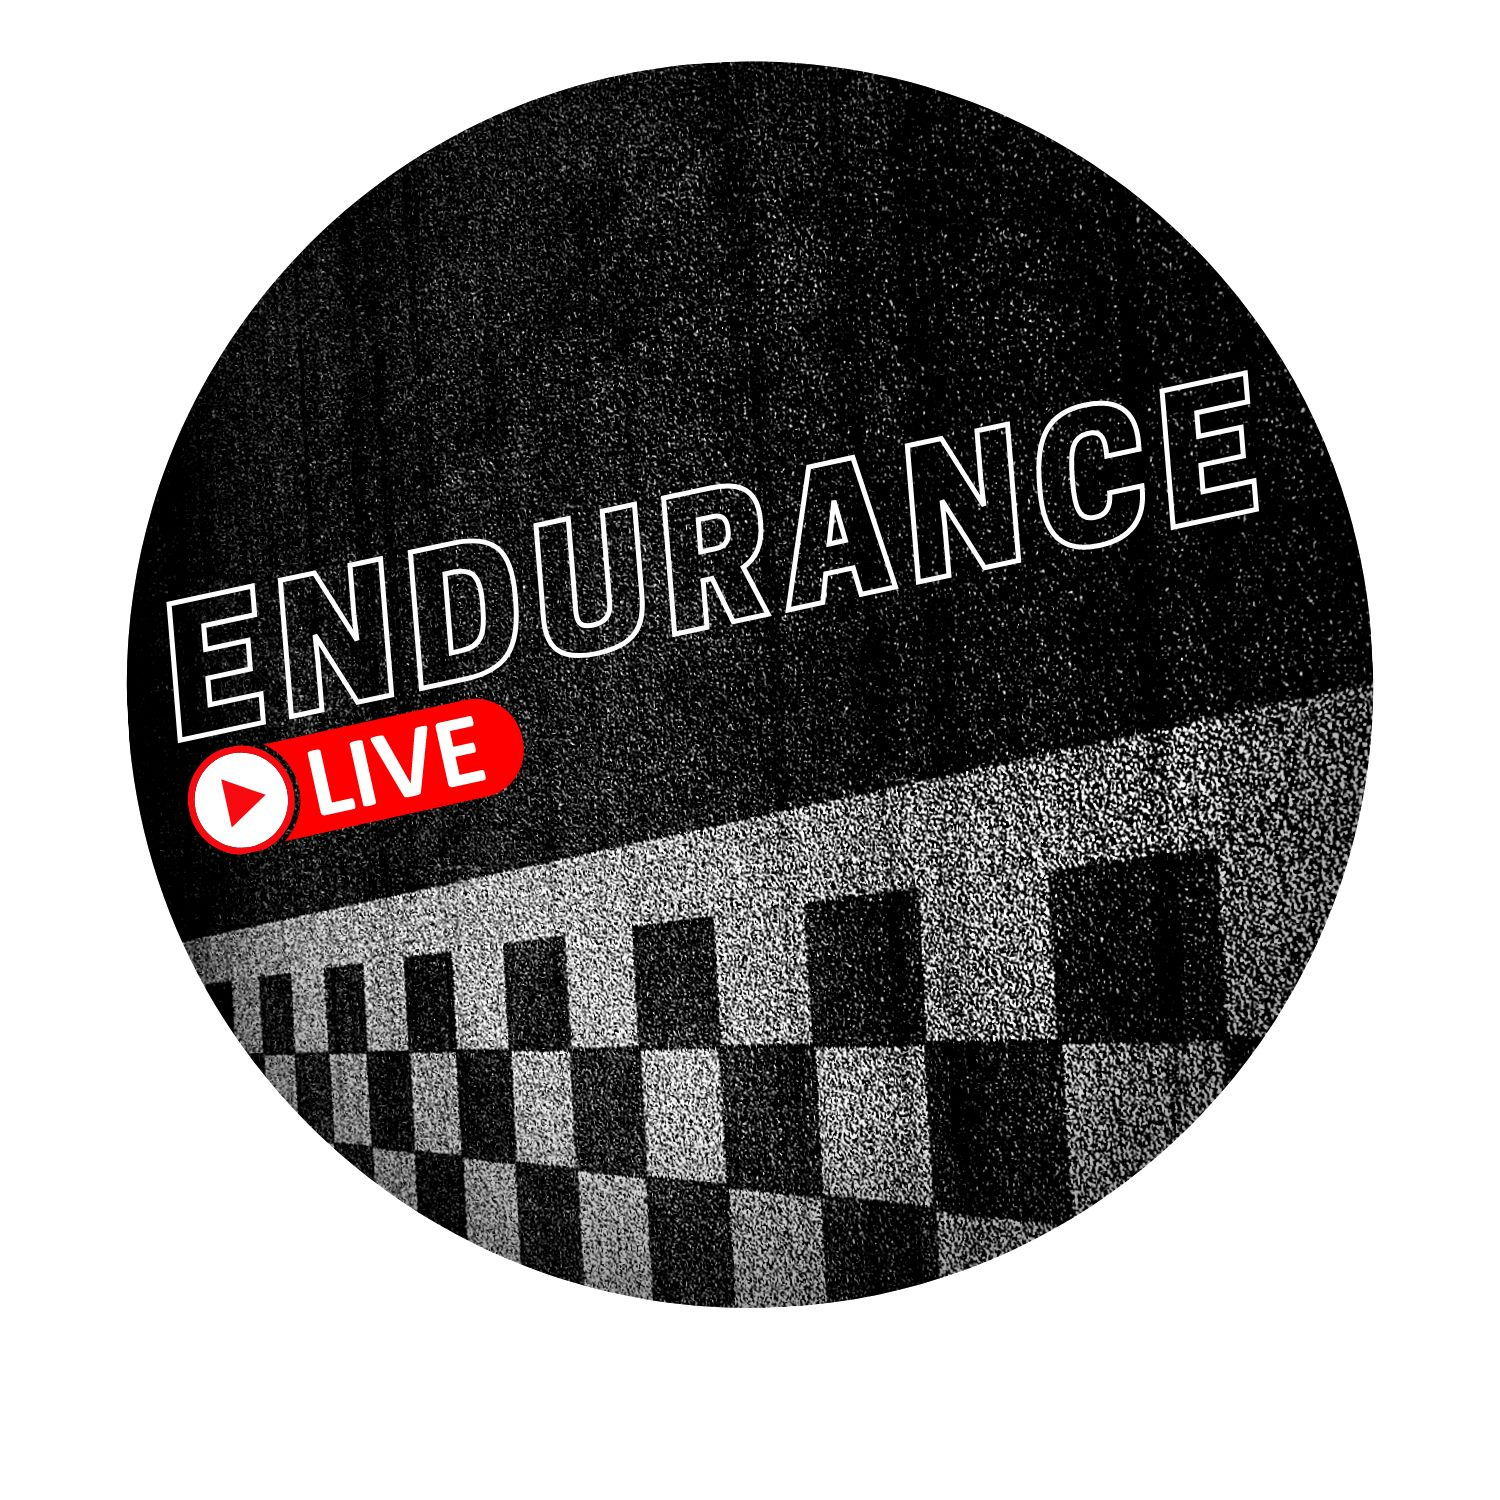 Endurance Live